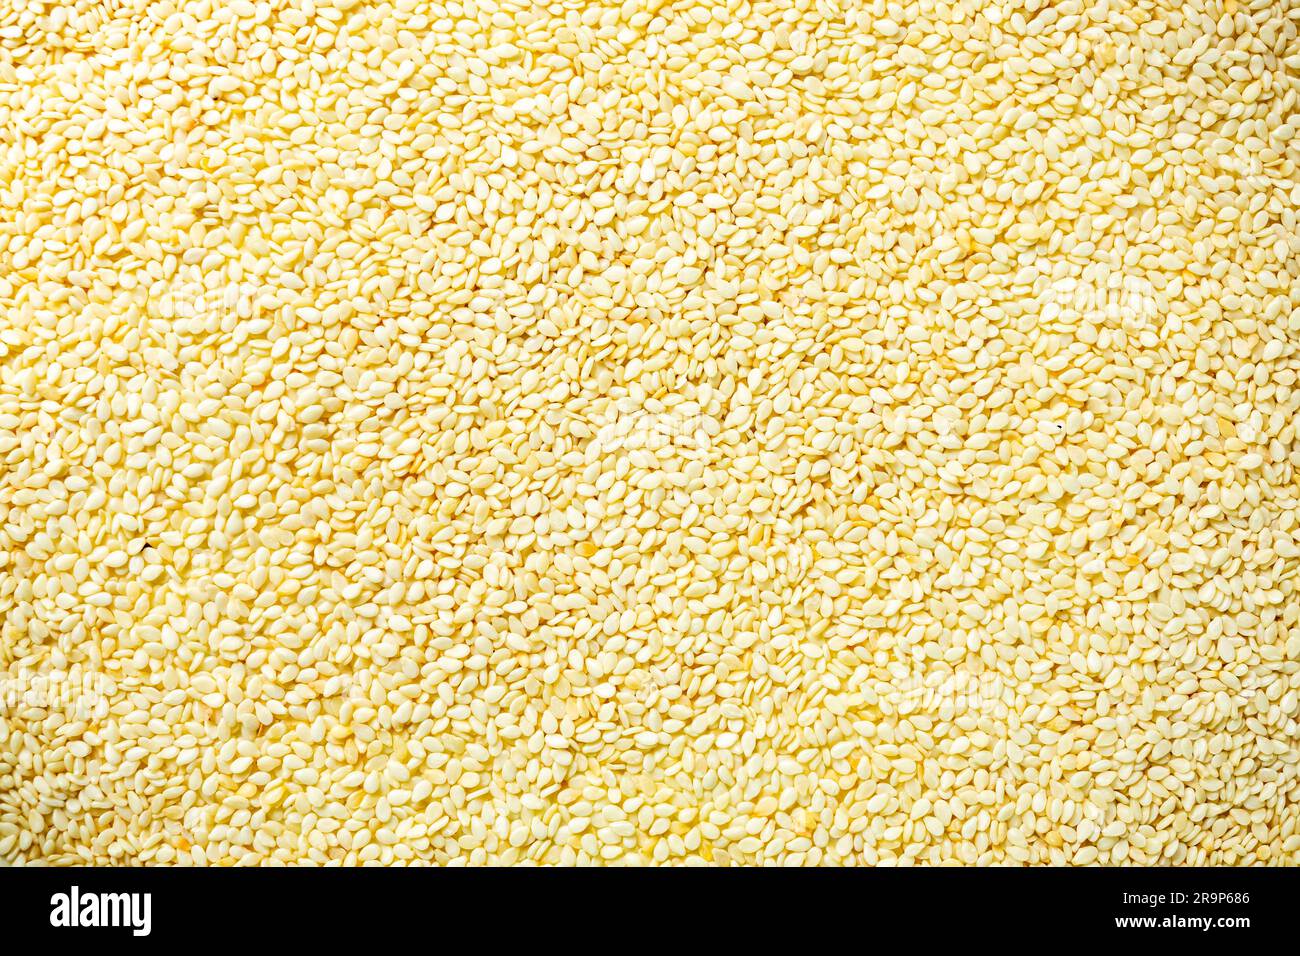 Top view pile of organic white sesame seeds (Sesamum indicum) as background full frame closeup horizontal format. Stock Photo